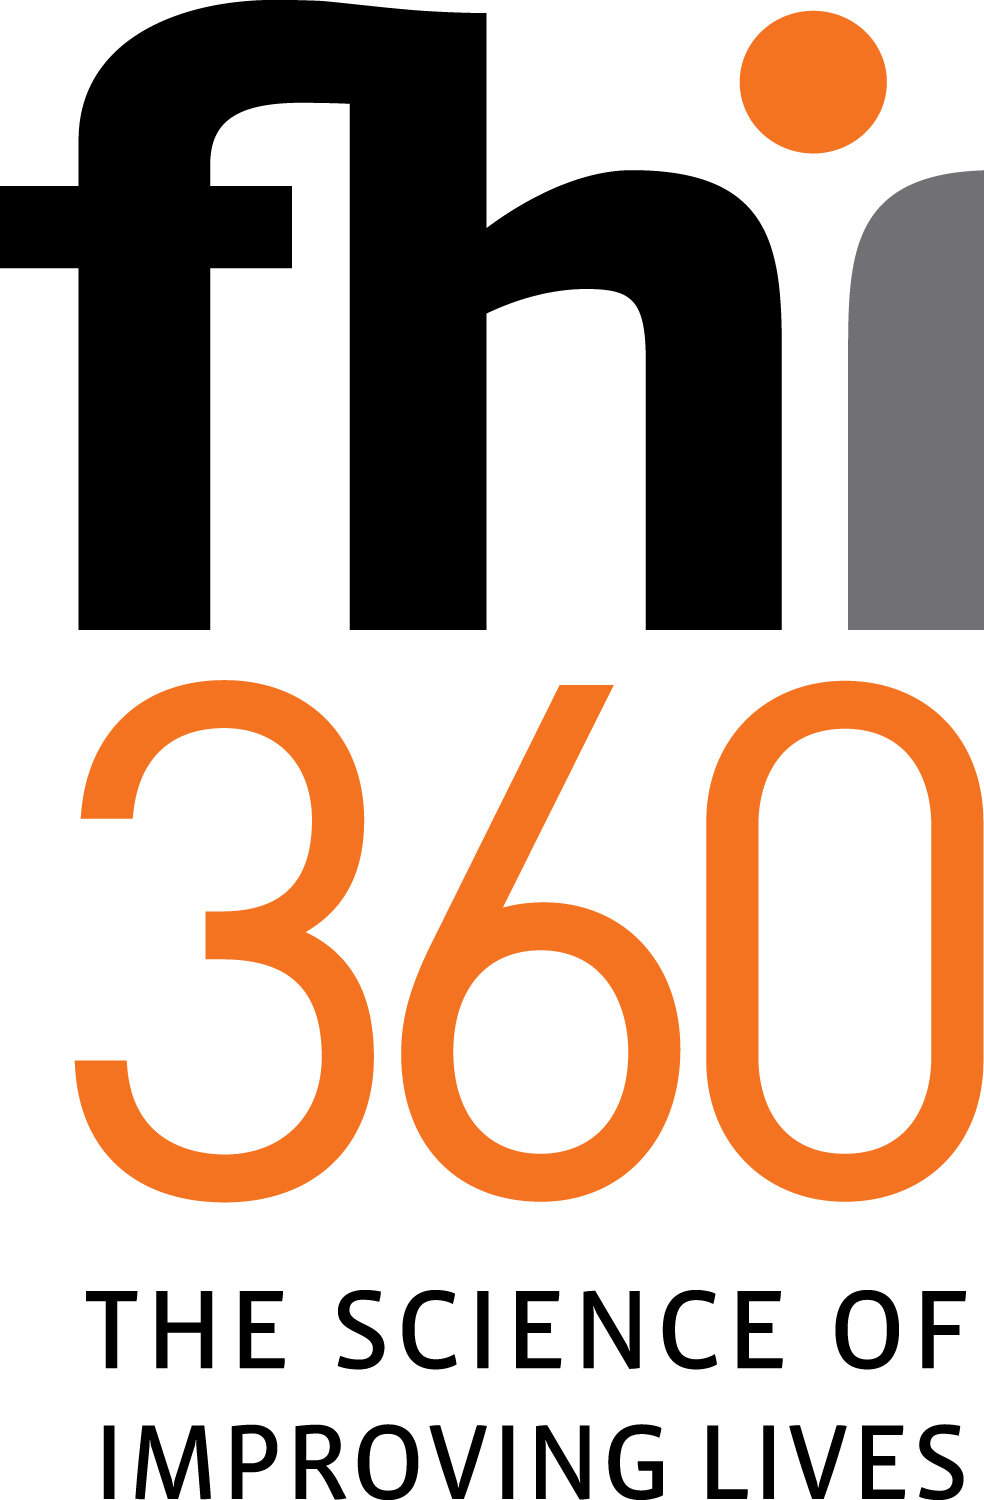 comms-fhi-360-logo-vertical-color.jpg